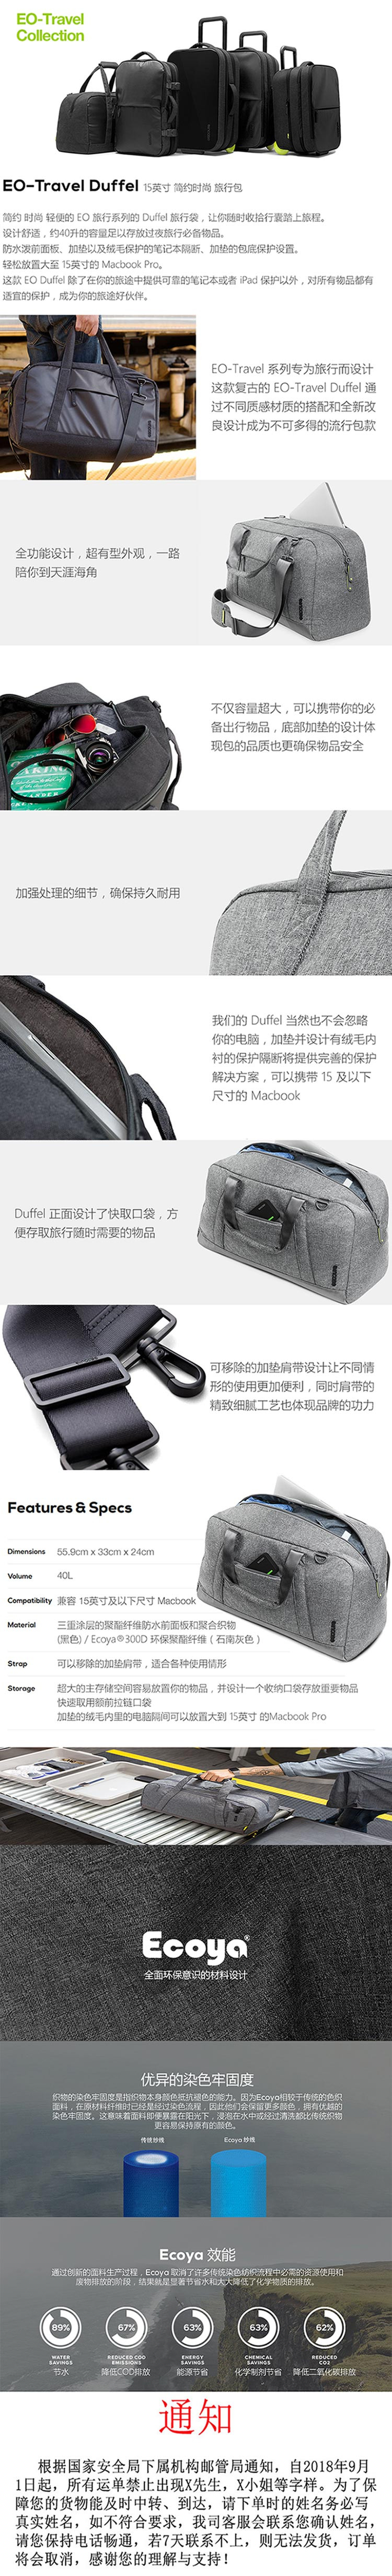 Incase EO-Travel Duffel 苹果电脑 15吋 简约旅行单肩包